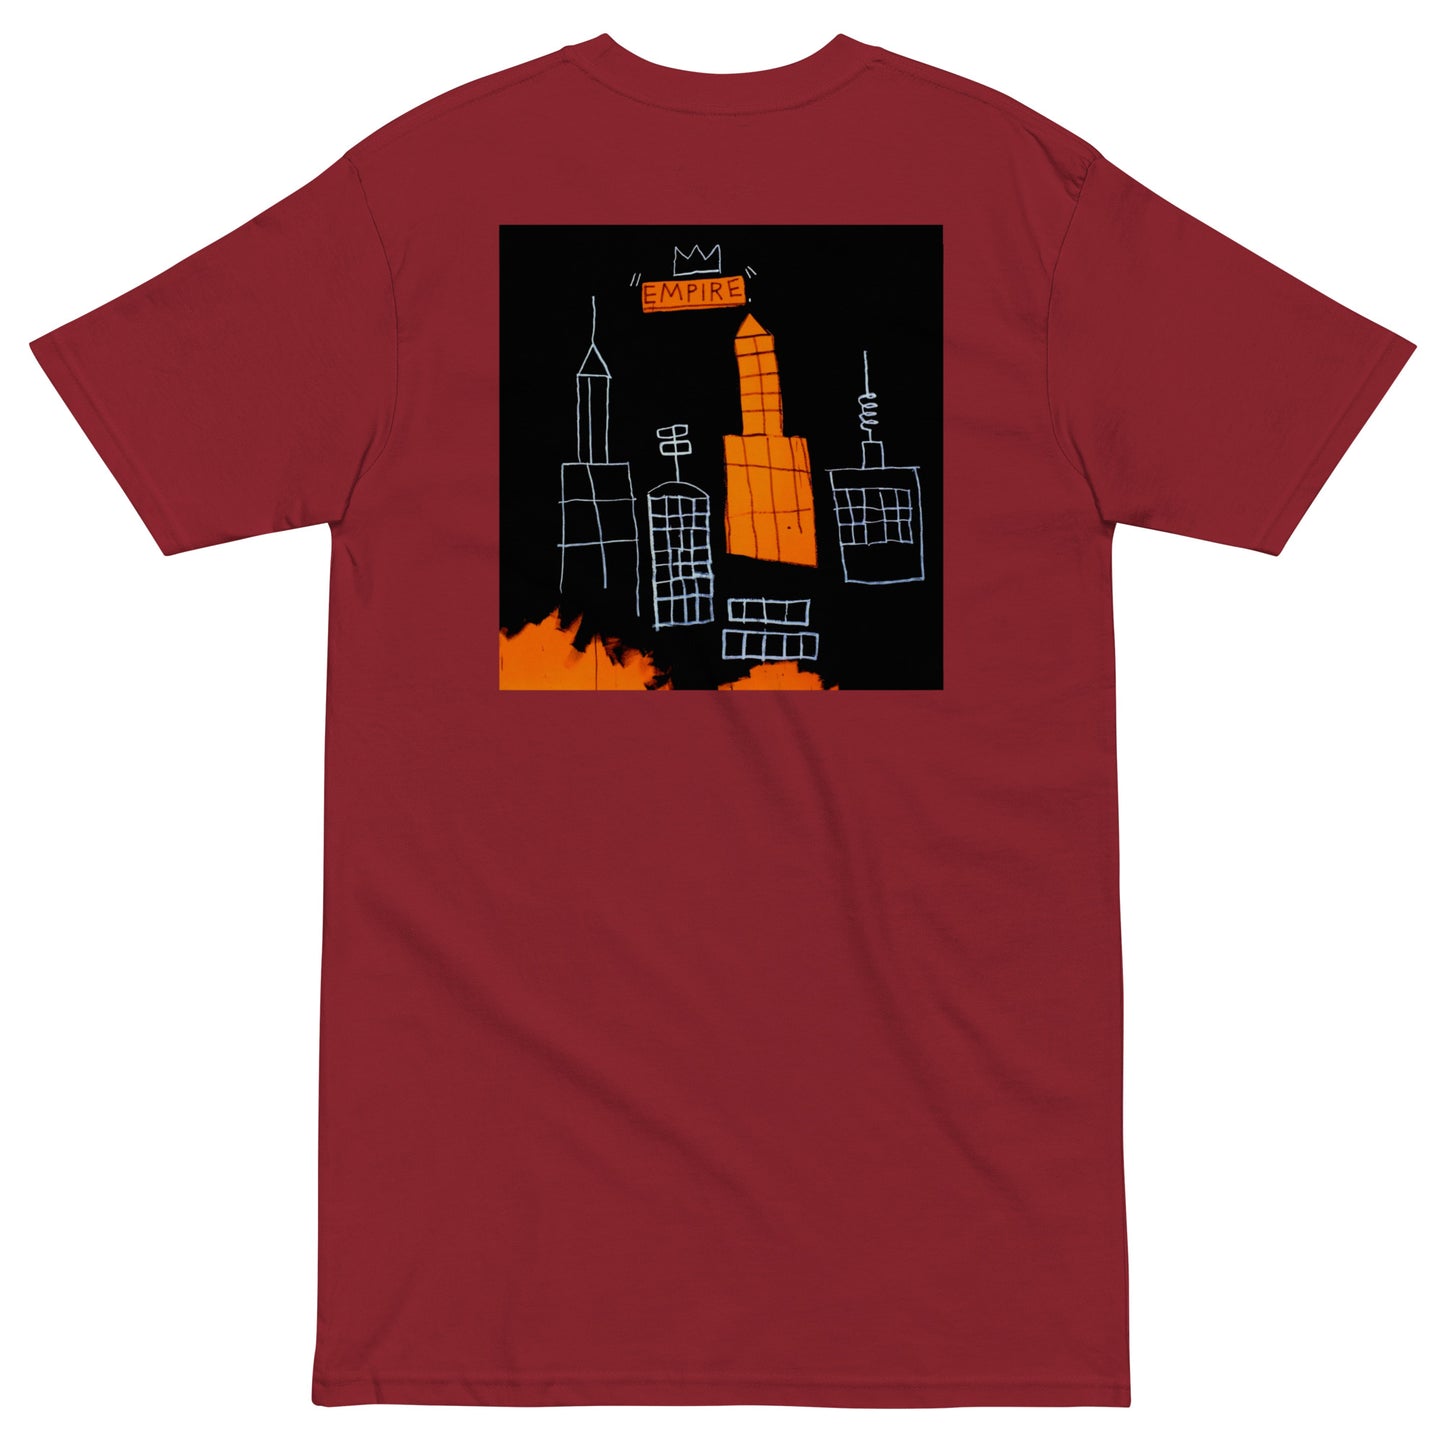 Jean-Michel Basquiat "Mecca" 1982 Artwork Embroidered + Printed Premium Streetwear T-shirt Red